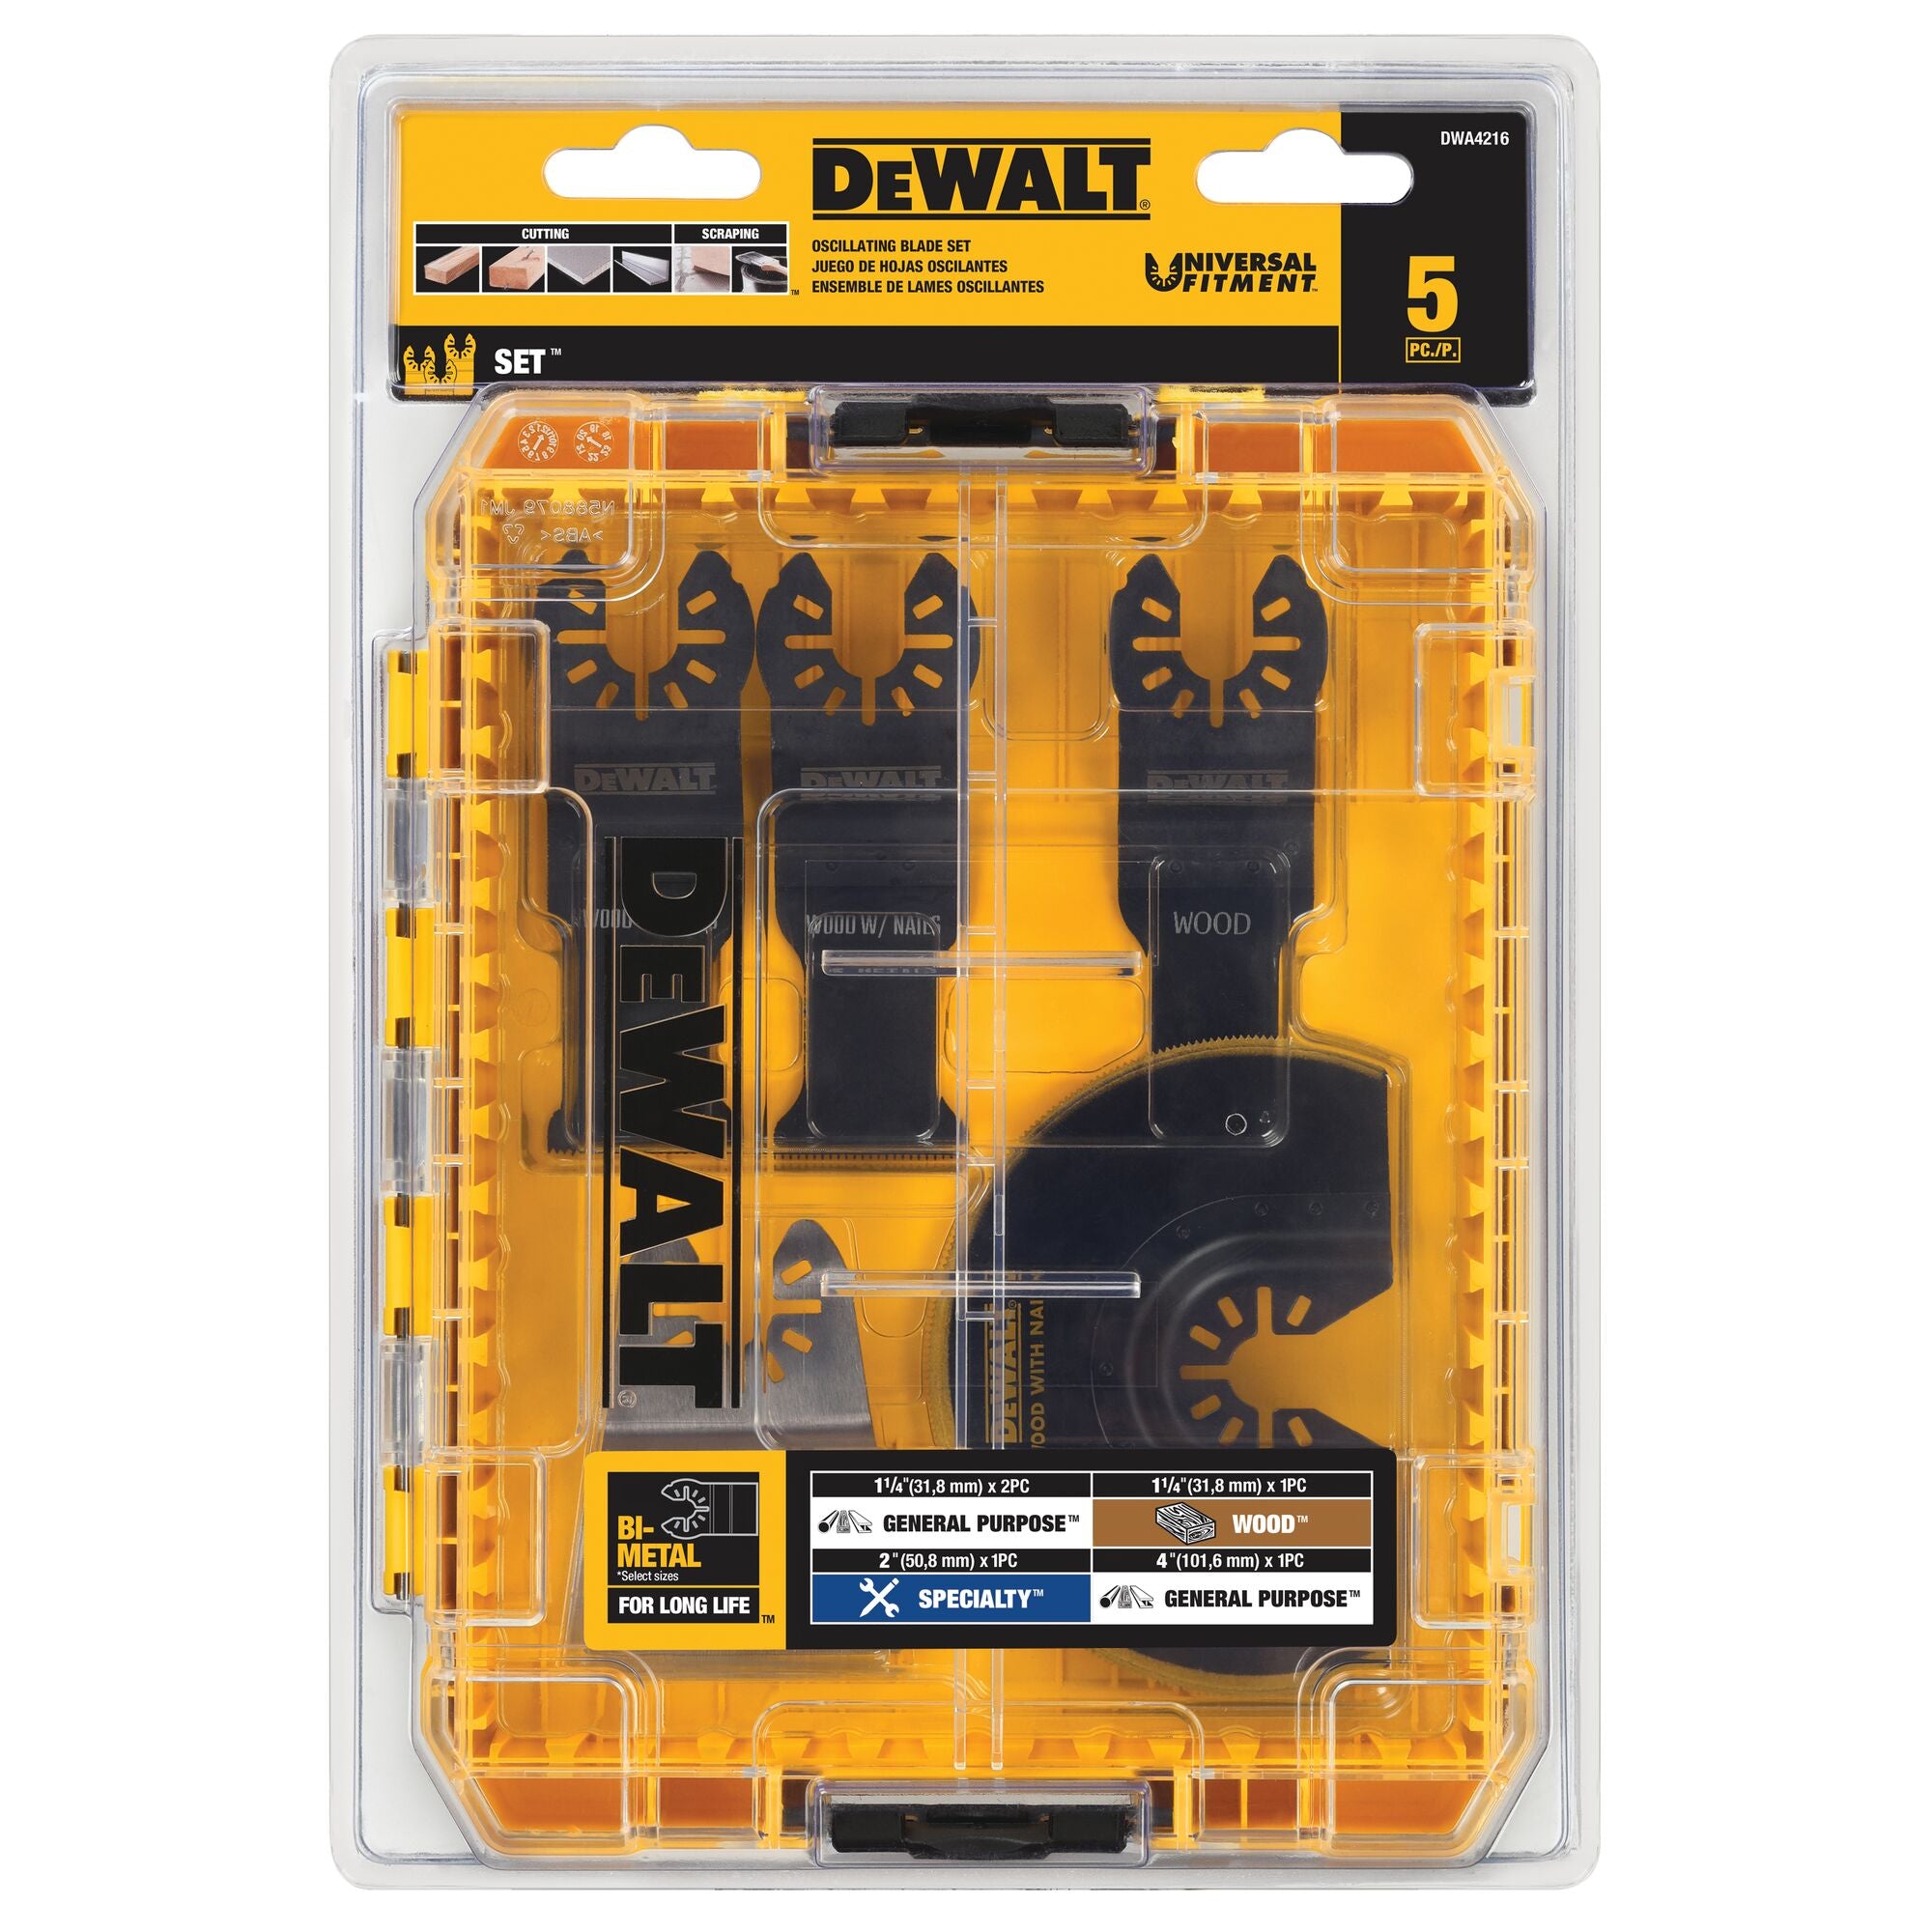 Dewalt DWA4216 5 piece osciallating tool kit, in packaging.